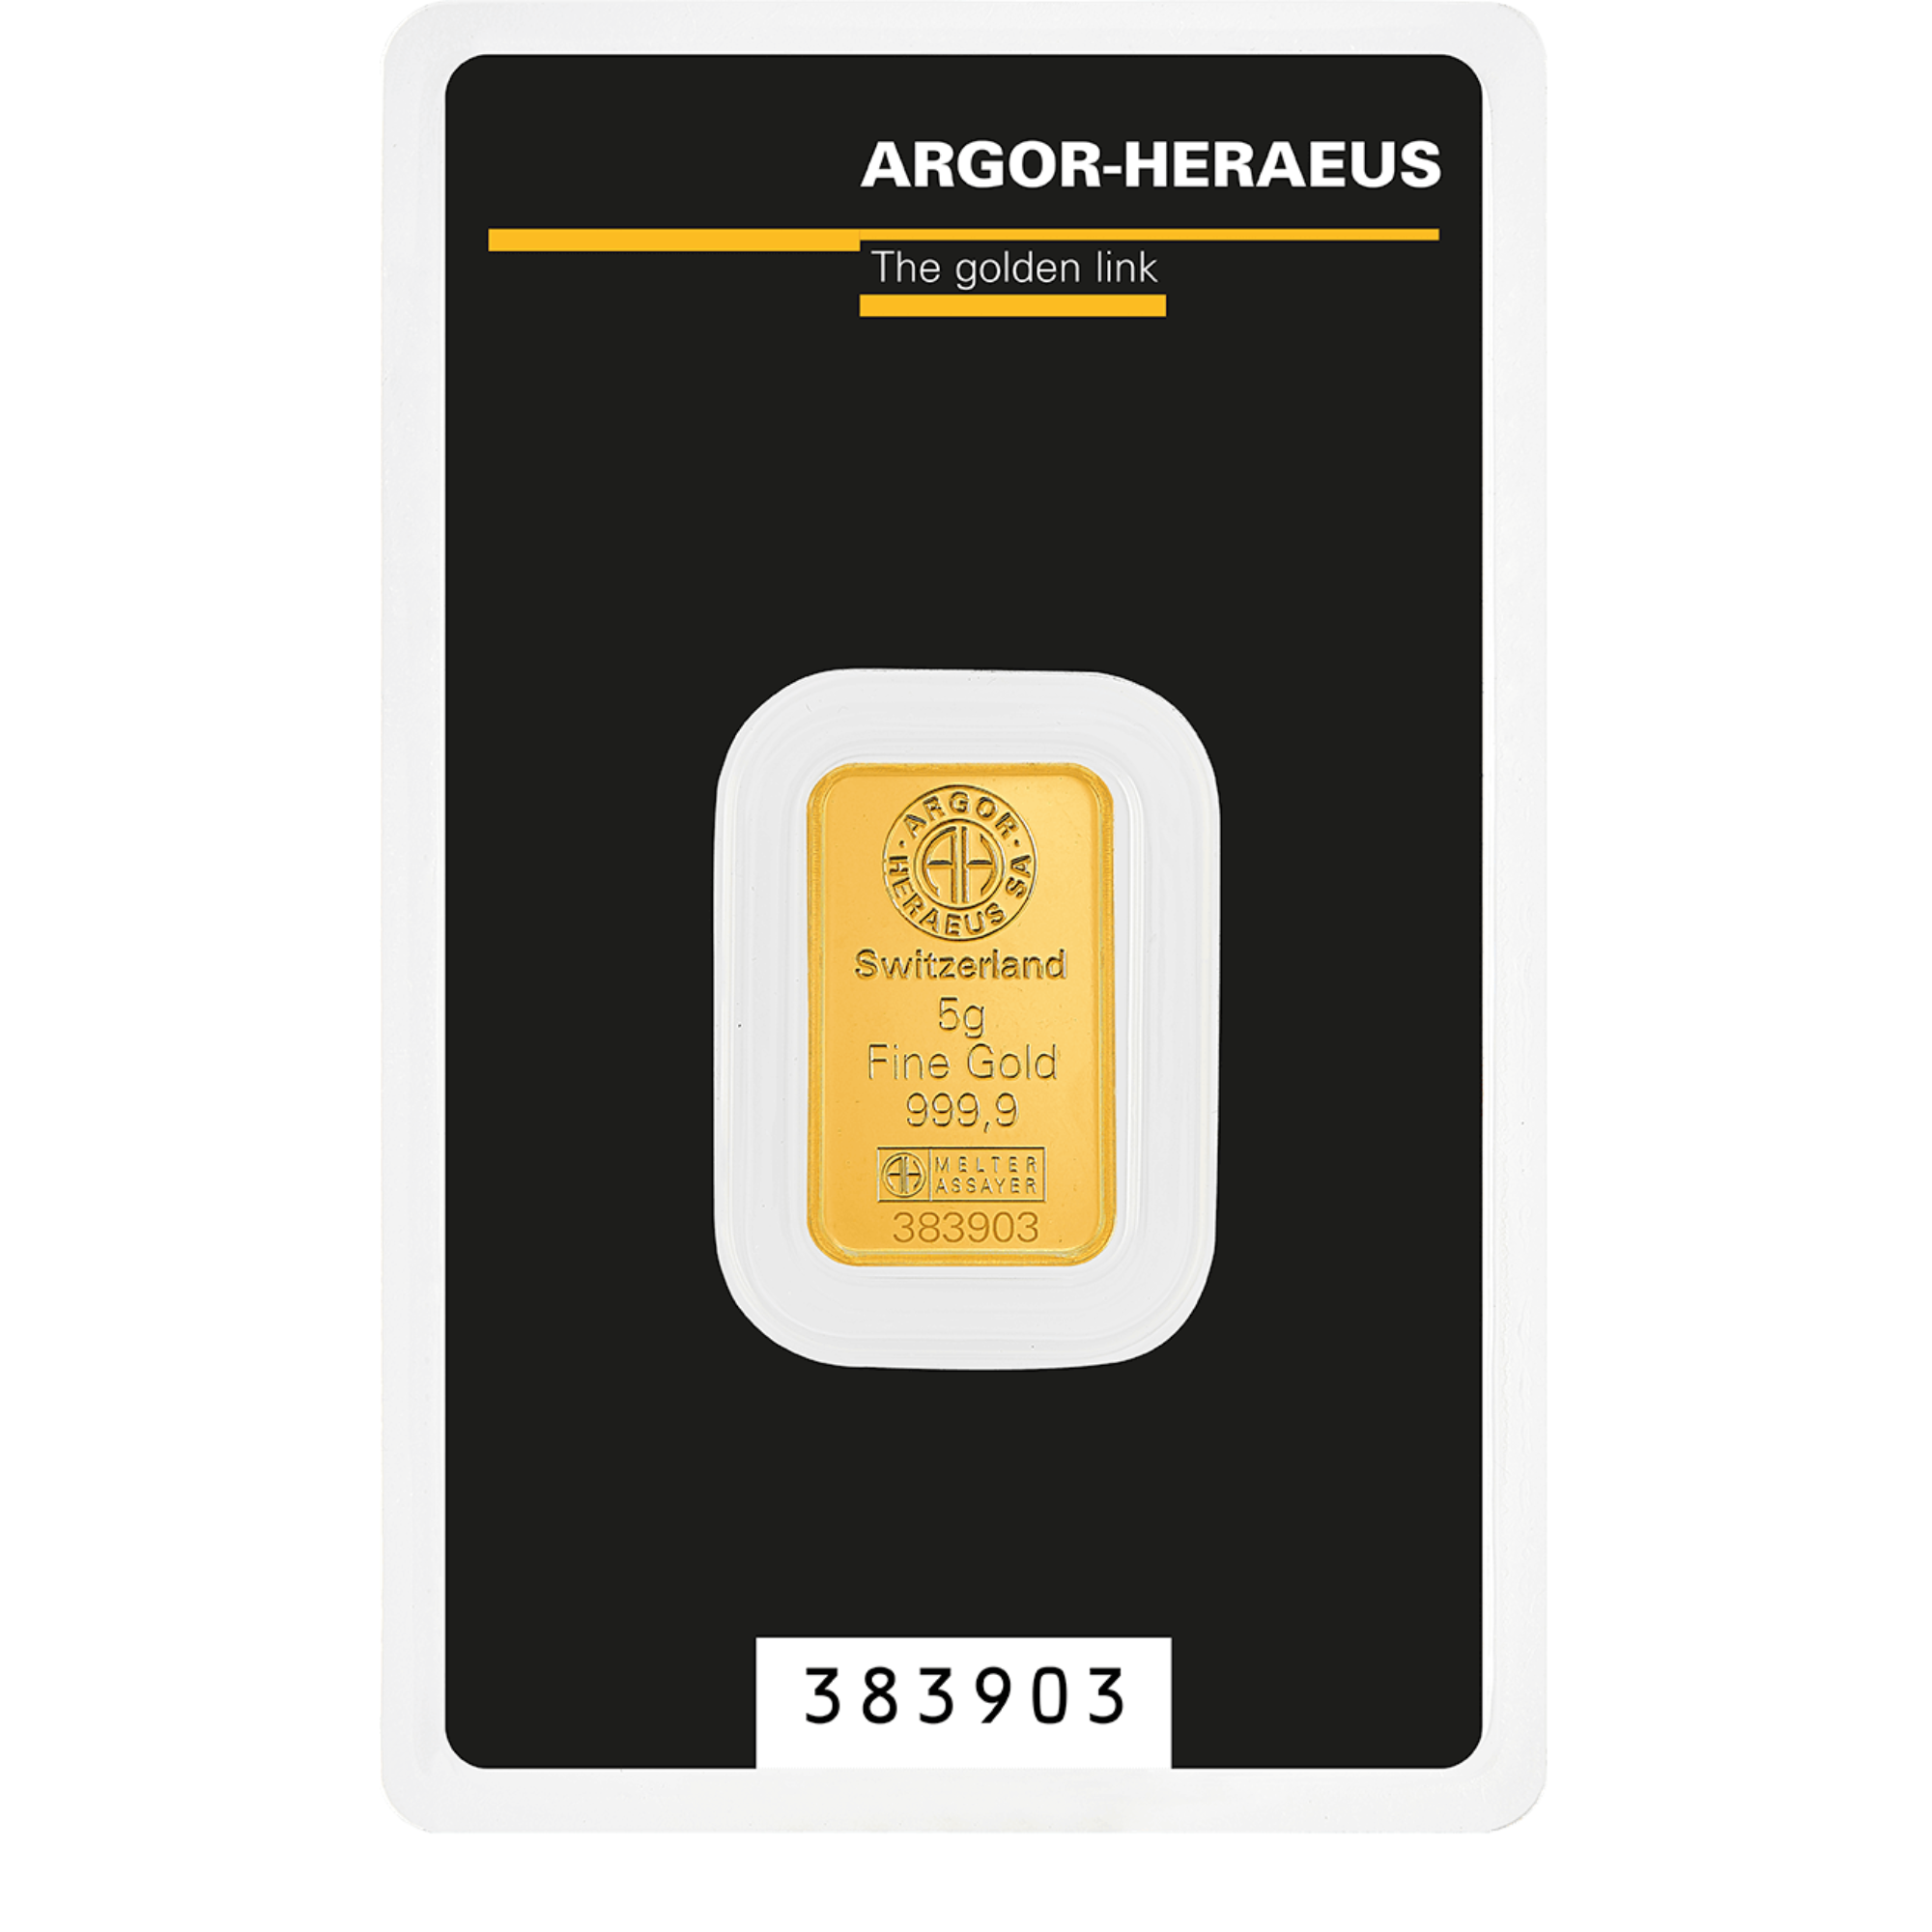 5g Argor-Heraeus Classic Gold Minted Bar